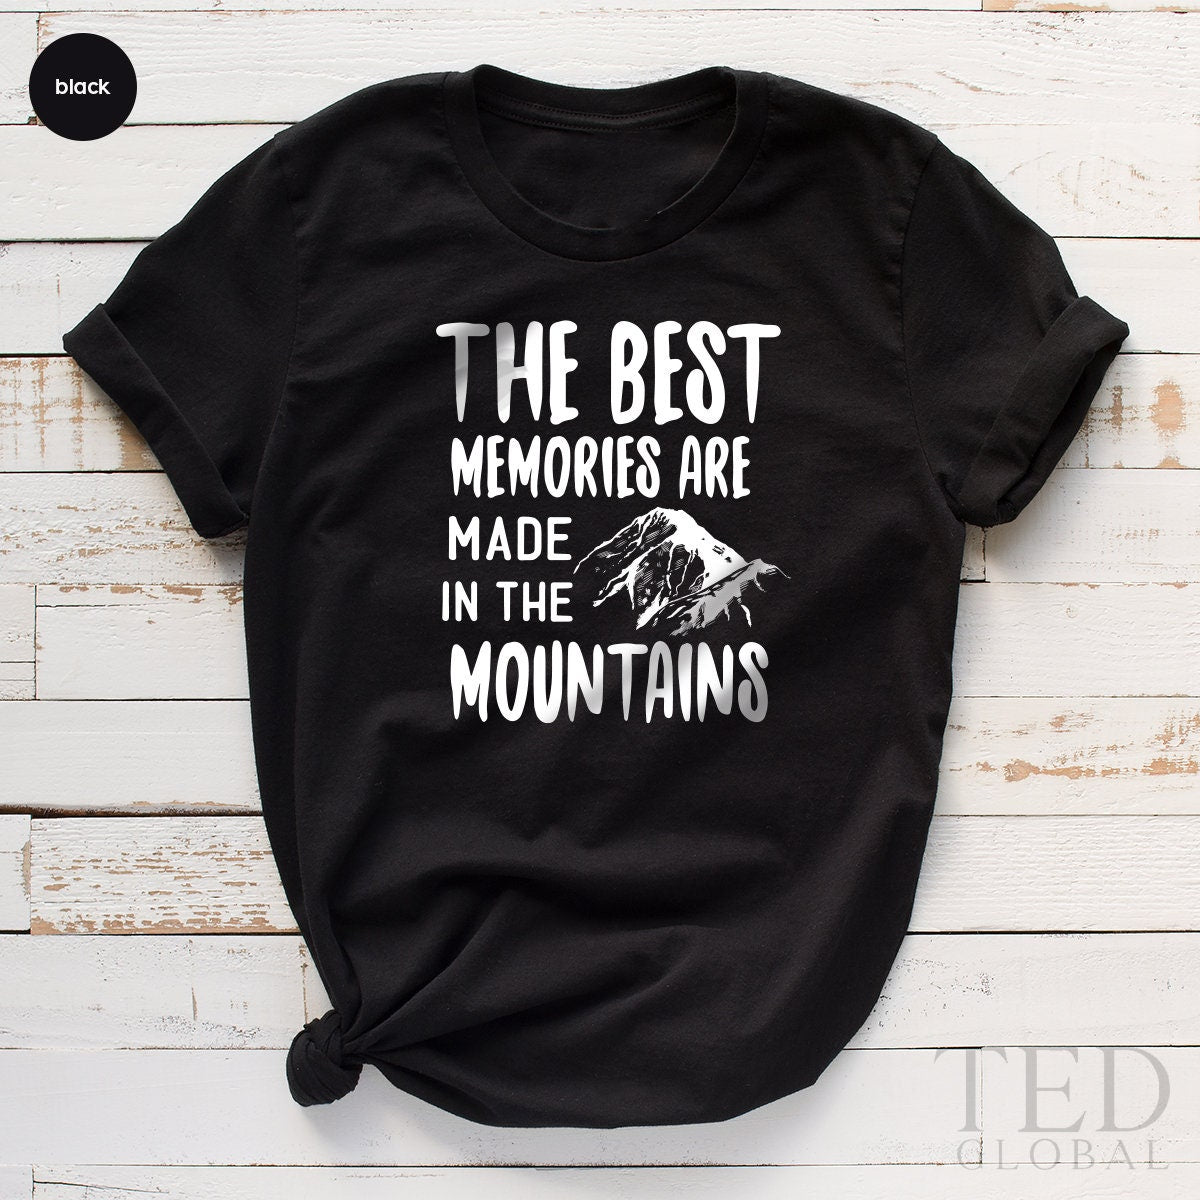 Mountains T Shirt, Adventure T-Shirt, Hiker Friends TShirt, Best Memories Shirt, Hiking Shirt, Gift For Travel Lover, Mens Trip Tees - Fastdeliverytees.com